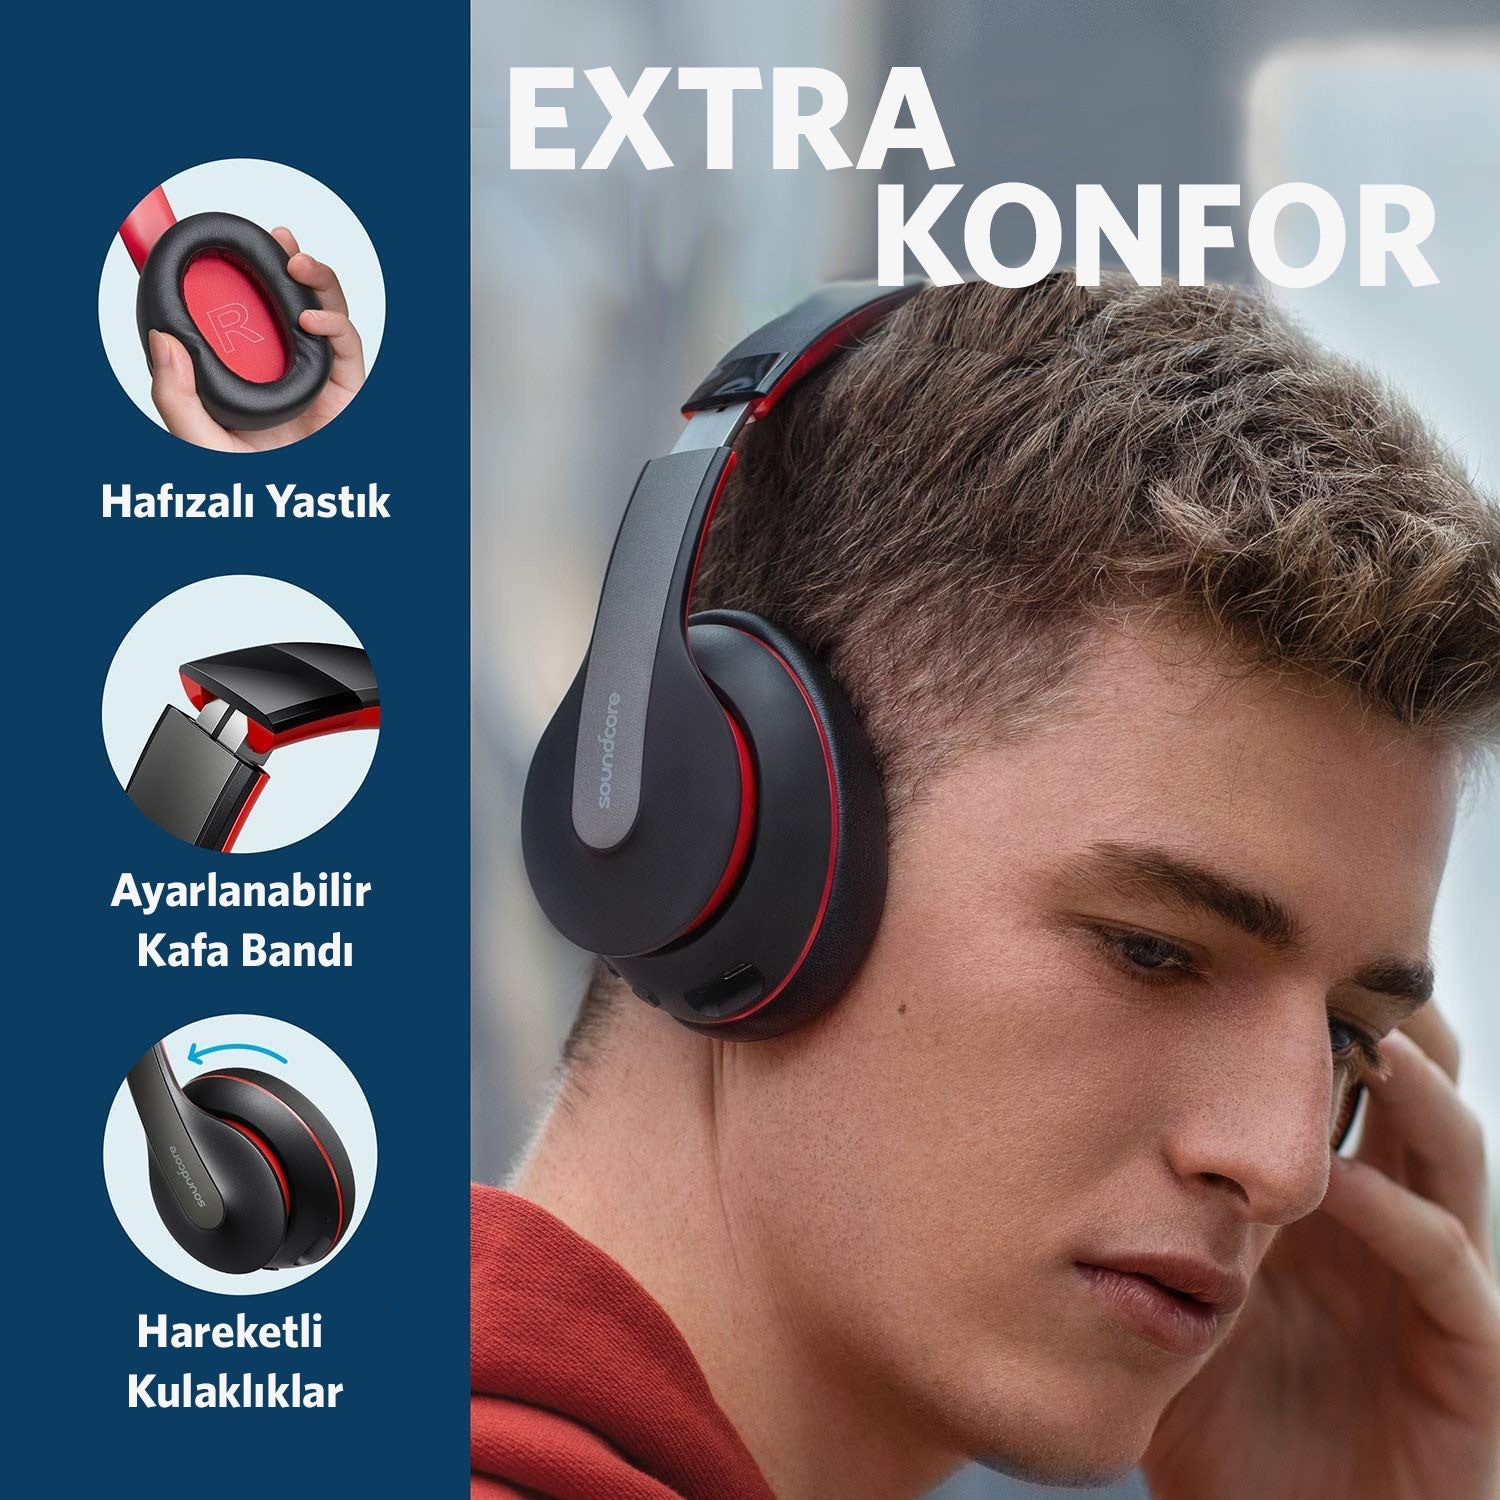 Anker Soundcore Life Q10 Kablosuz Bluetooth 5.0 Kulaklık - Siyah Kırmızı - Anker-TR